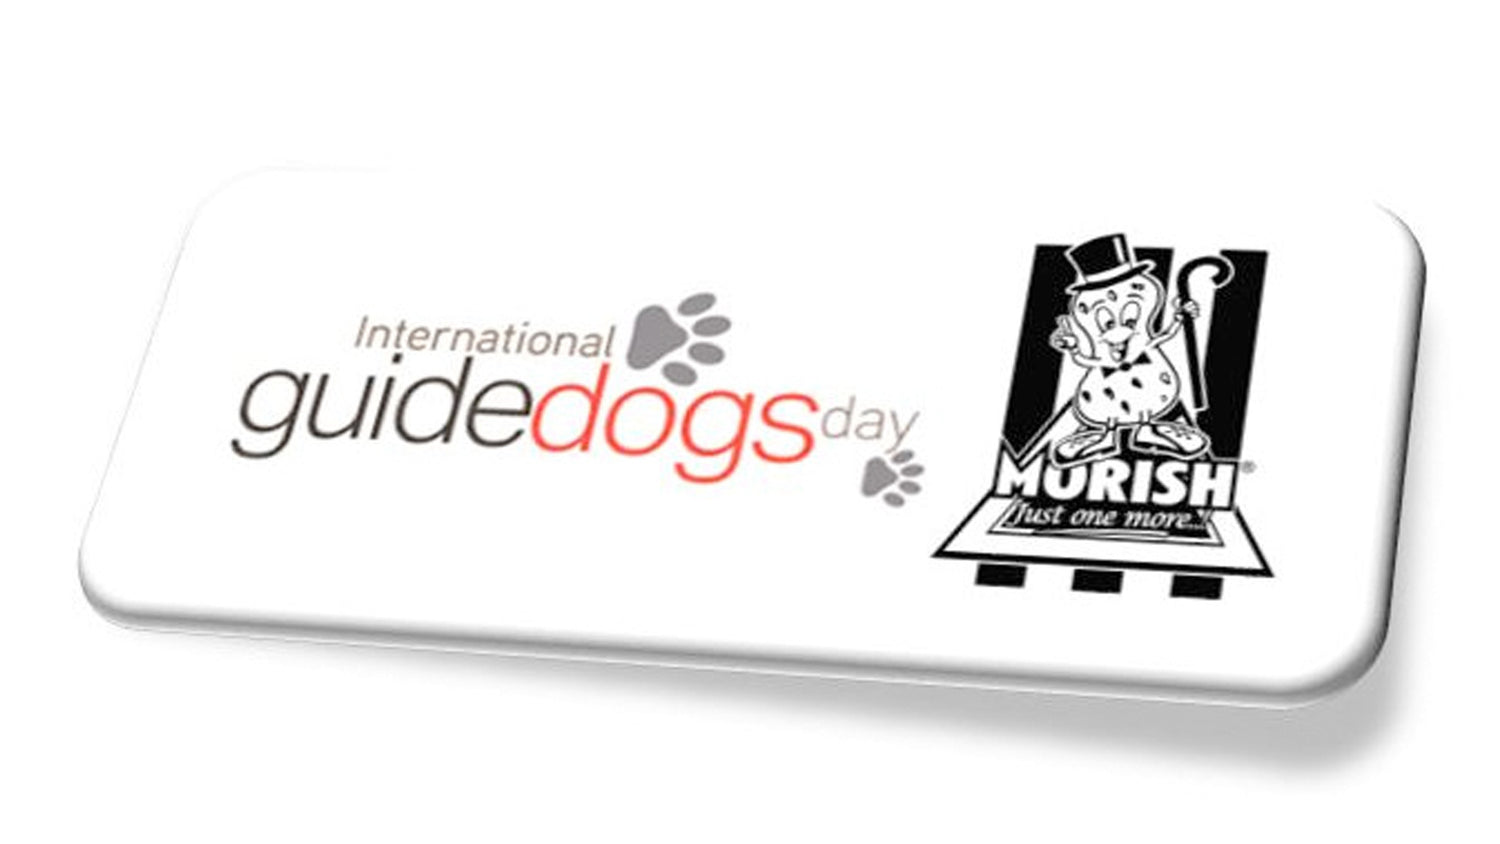 Morish & International Guide Dogs Day 2017